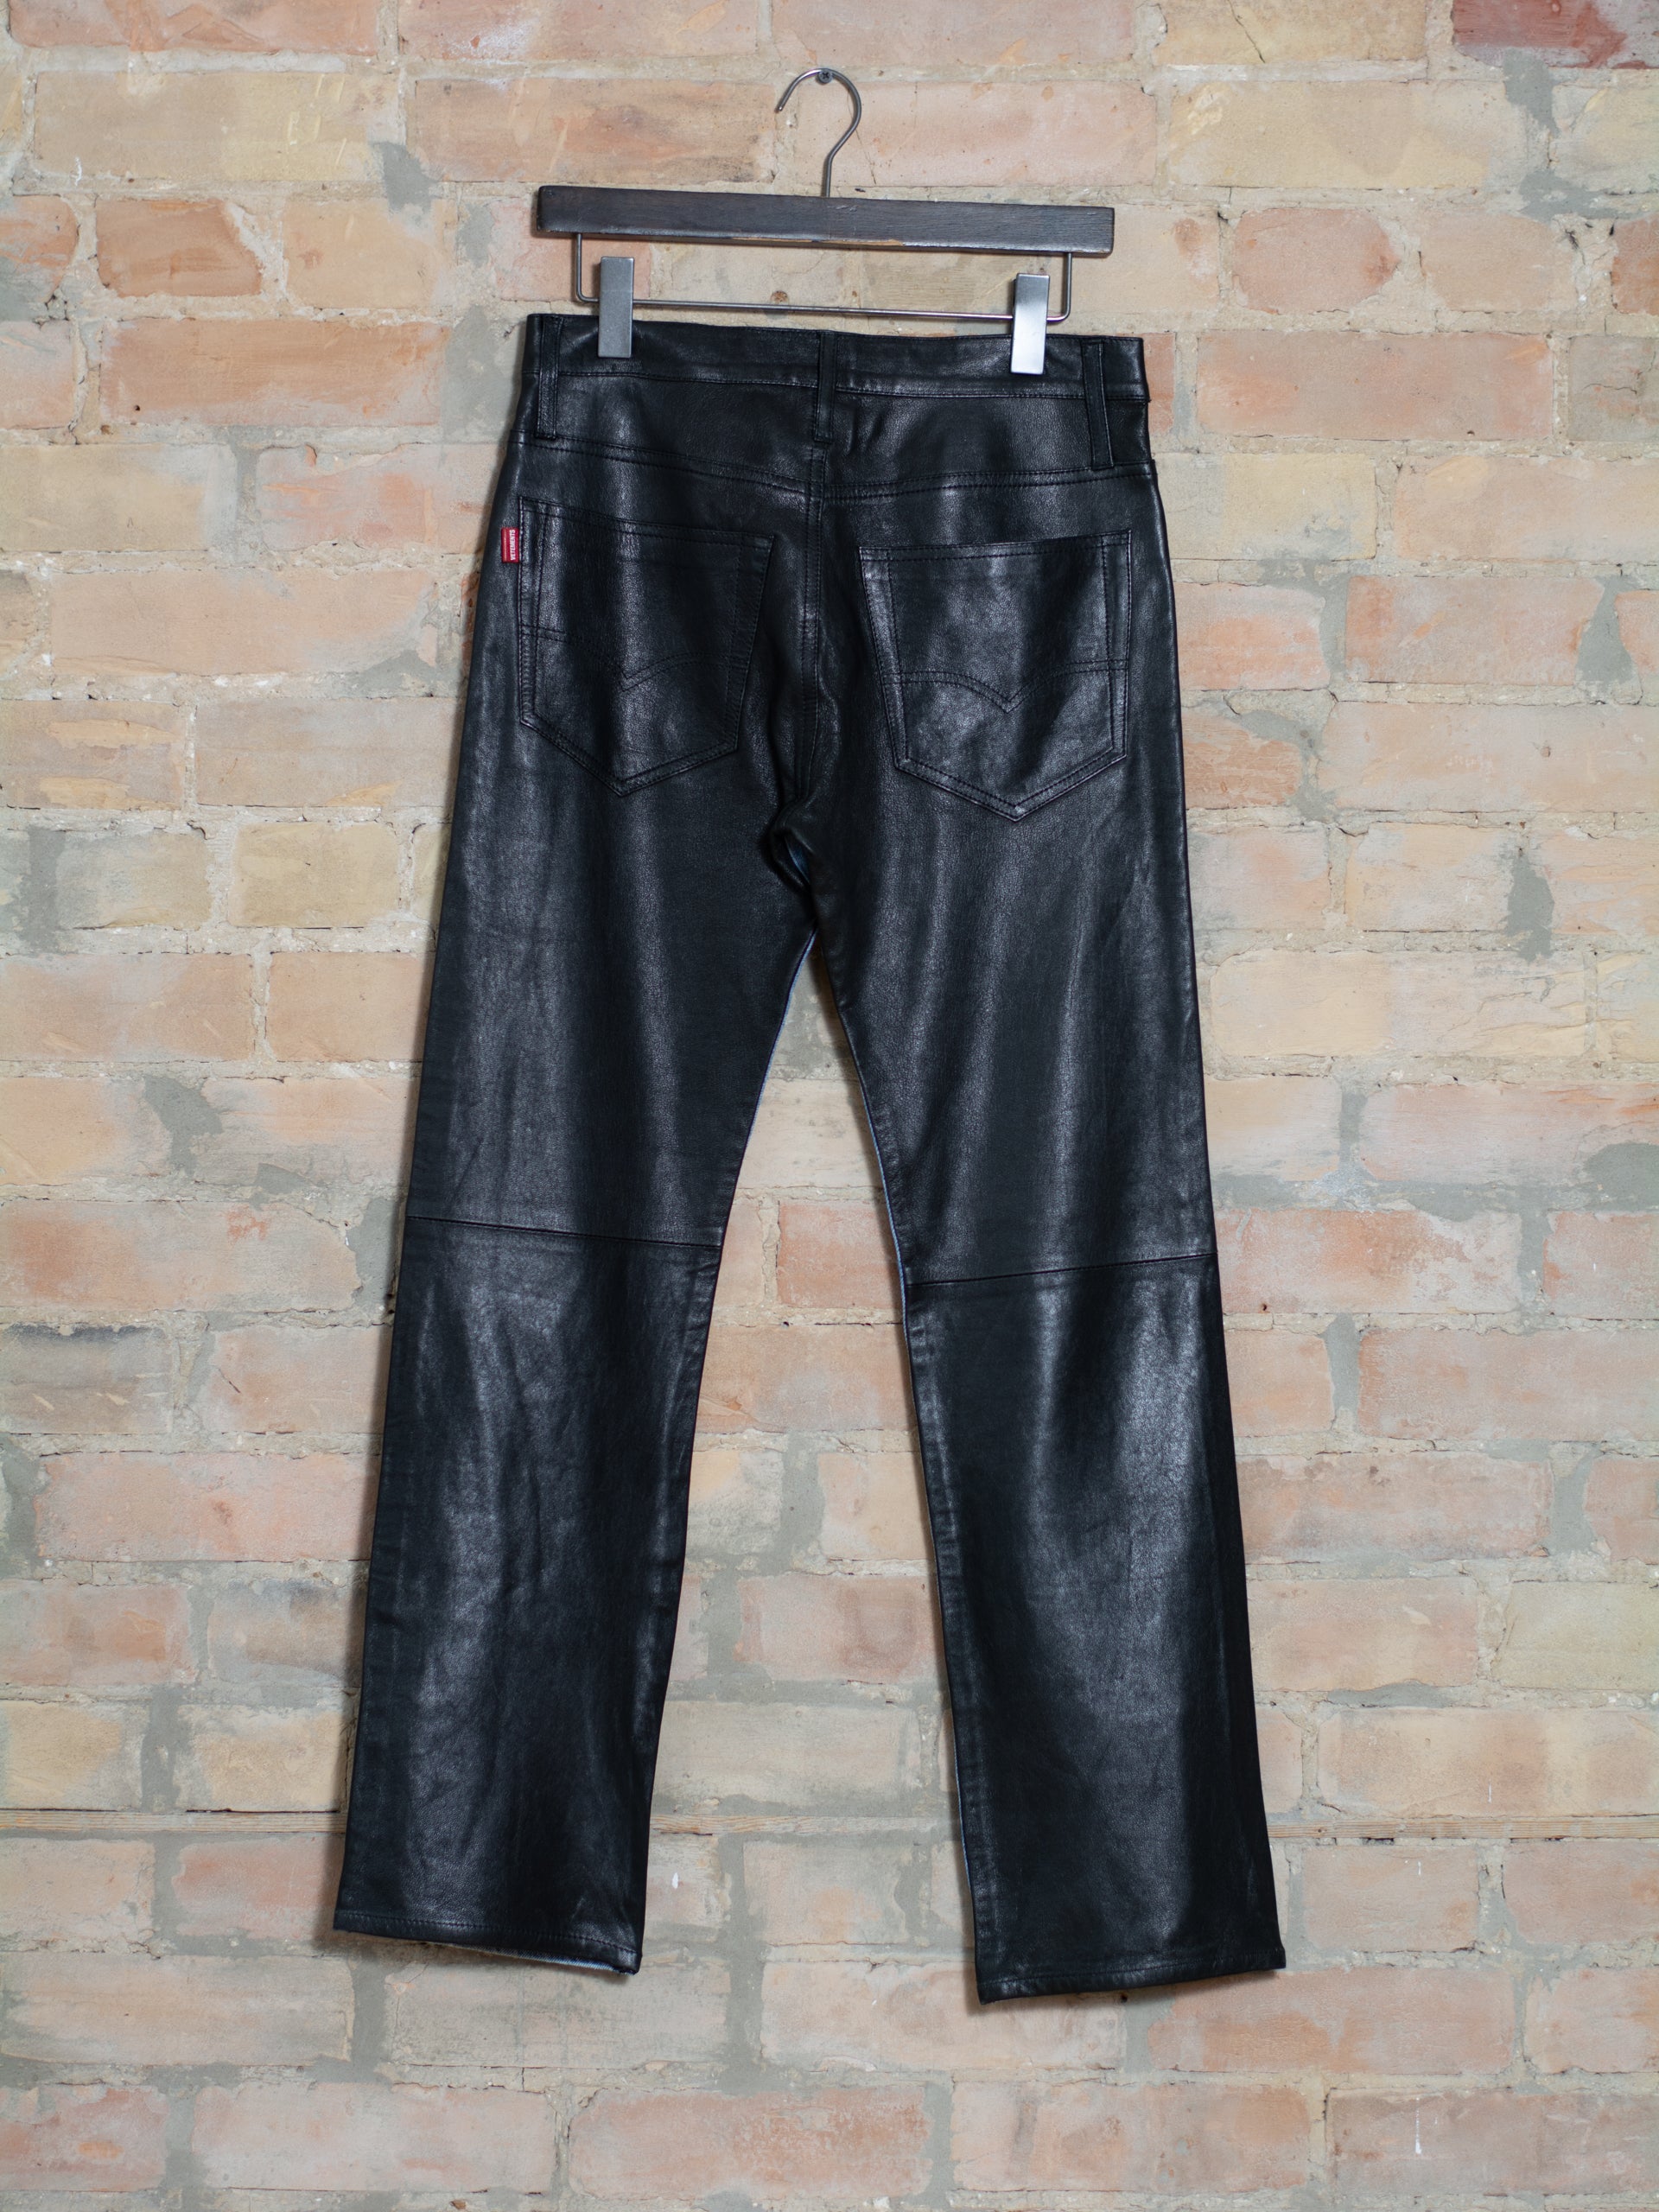 Leather Denim Jeans